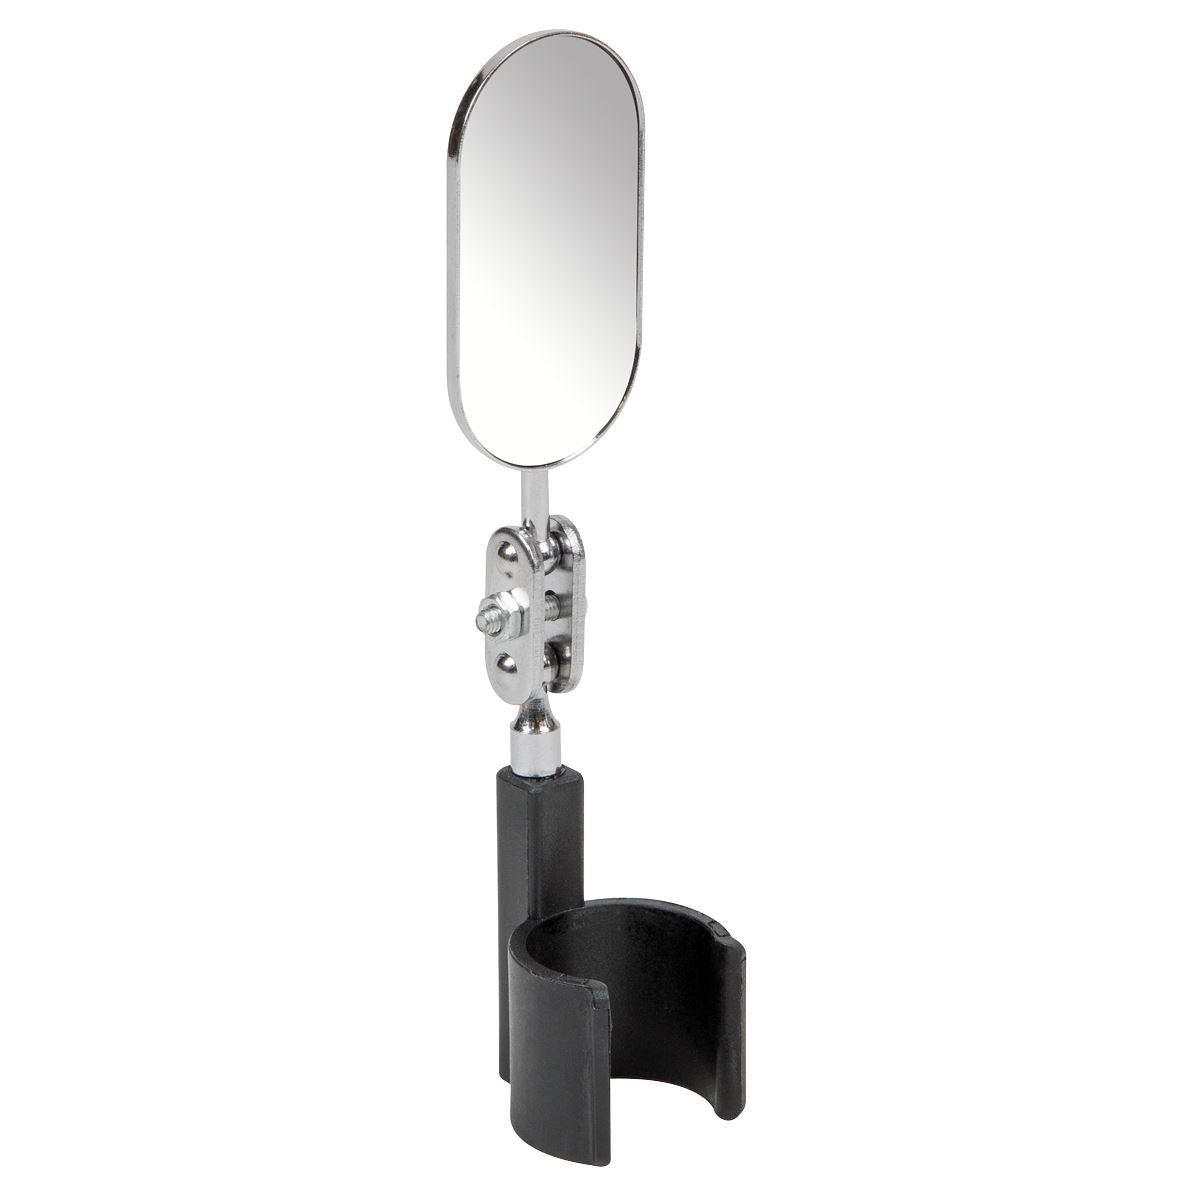 Sealey Narrow Mirror for LED Pick-Up Tool